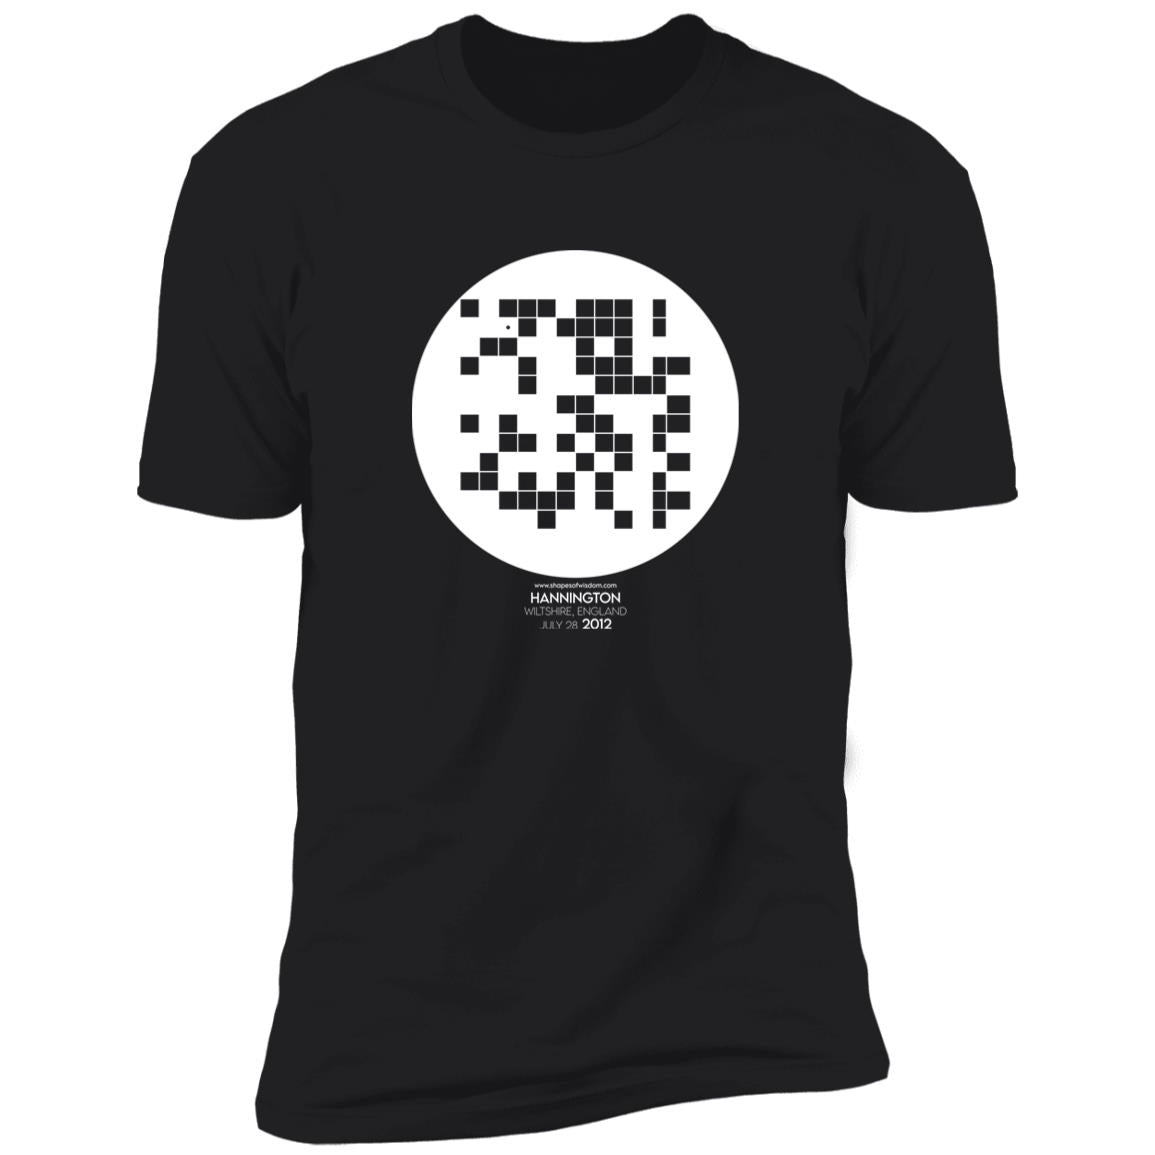 Crop Circle Premium T-Shirt - Hannington 2